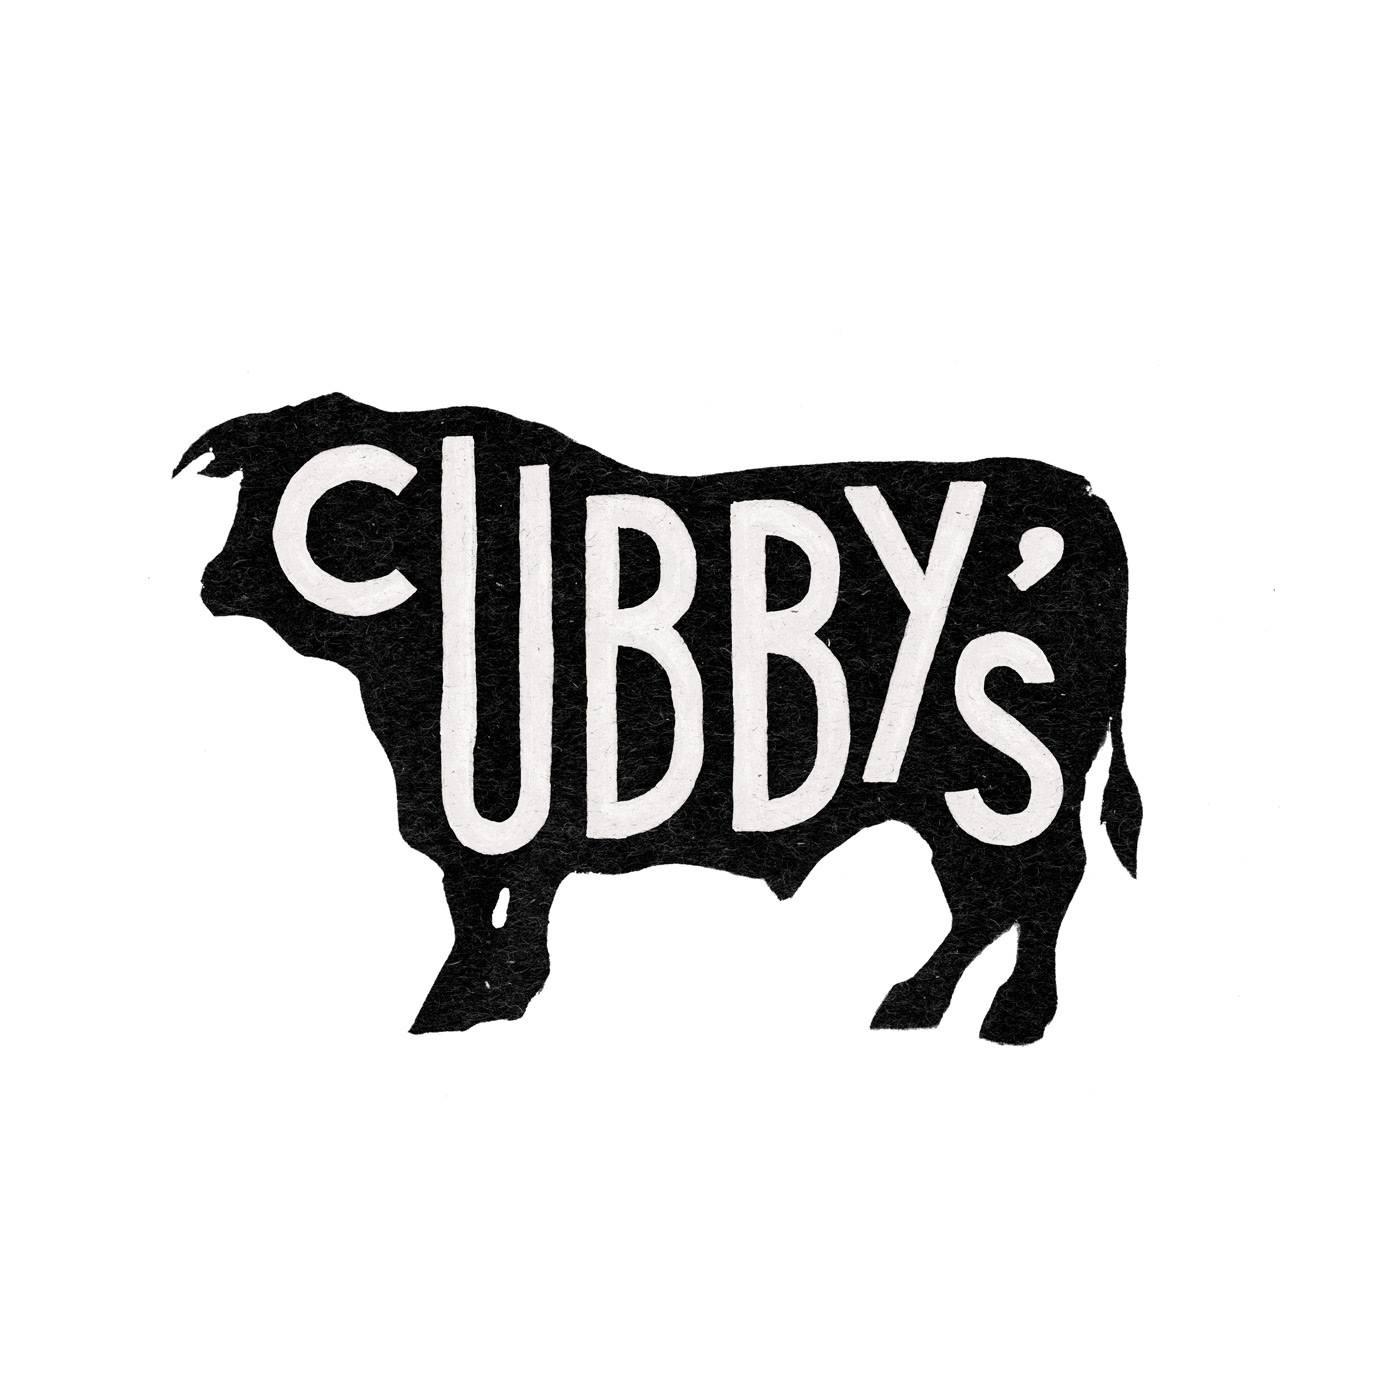 Cubby's - Provo, UT 84604 - (801)919-3023 | ShowMeLocal.com